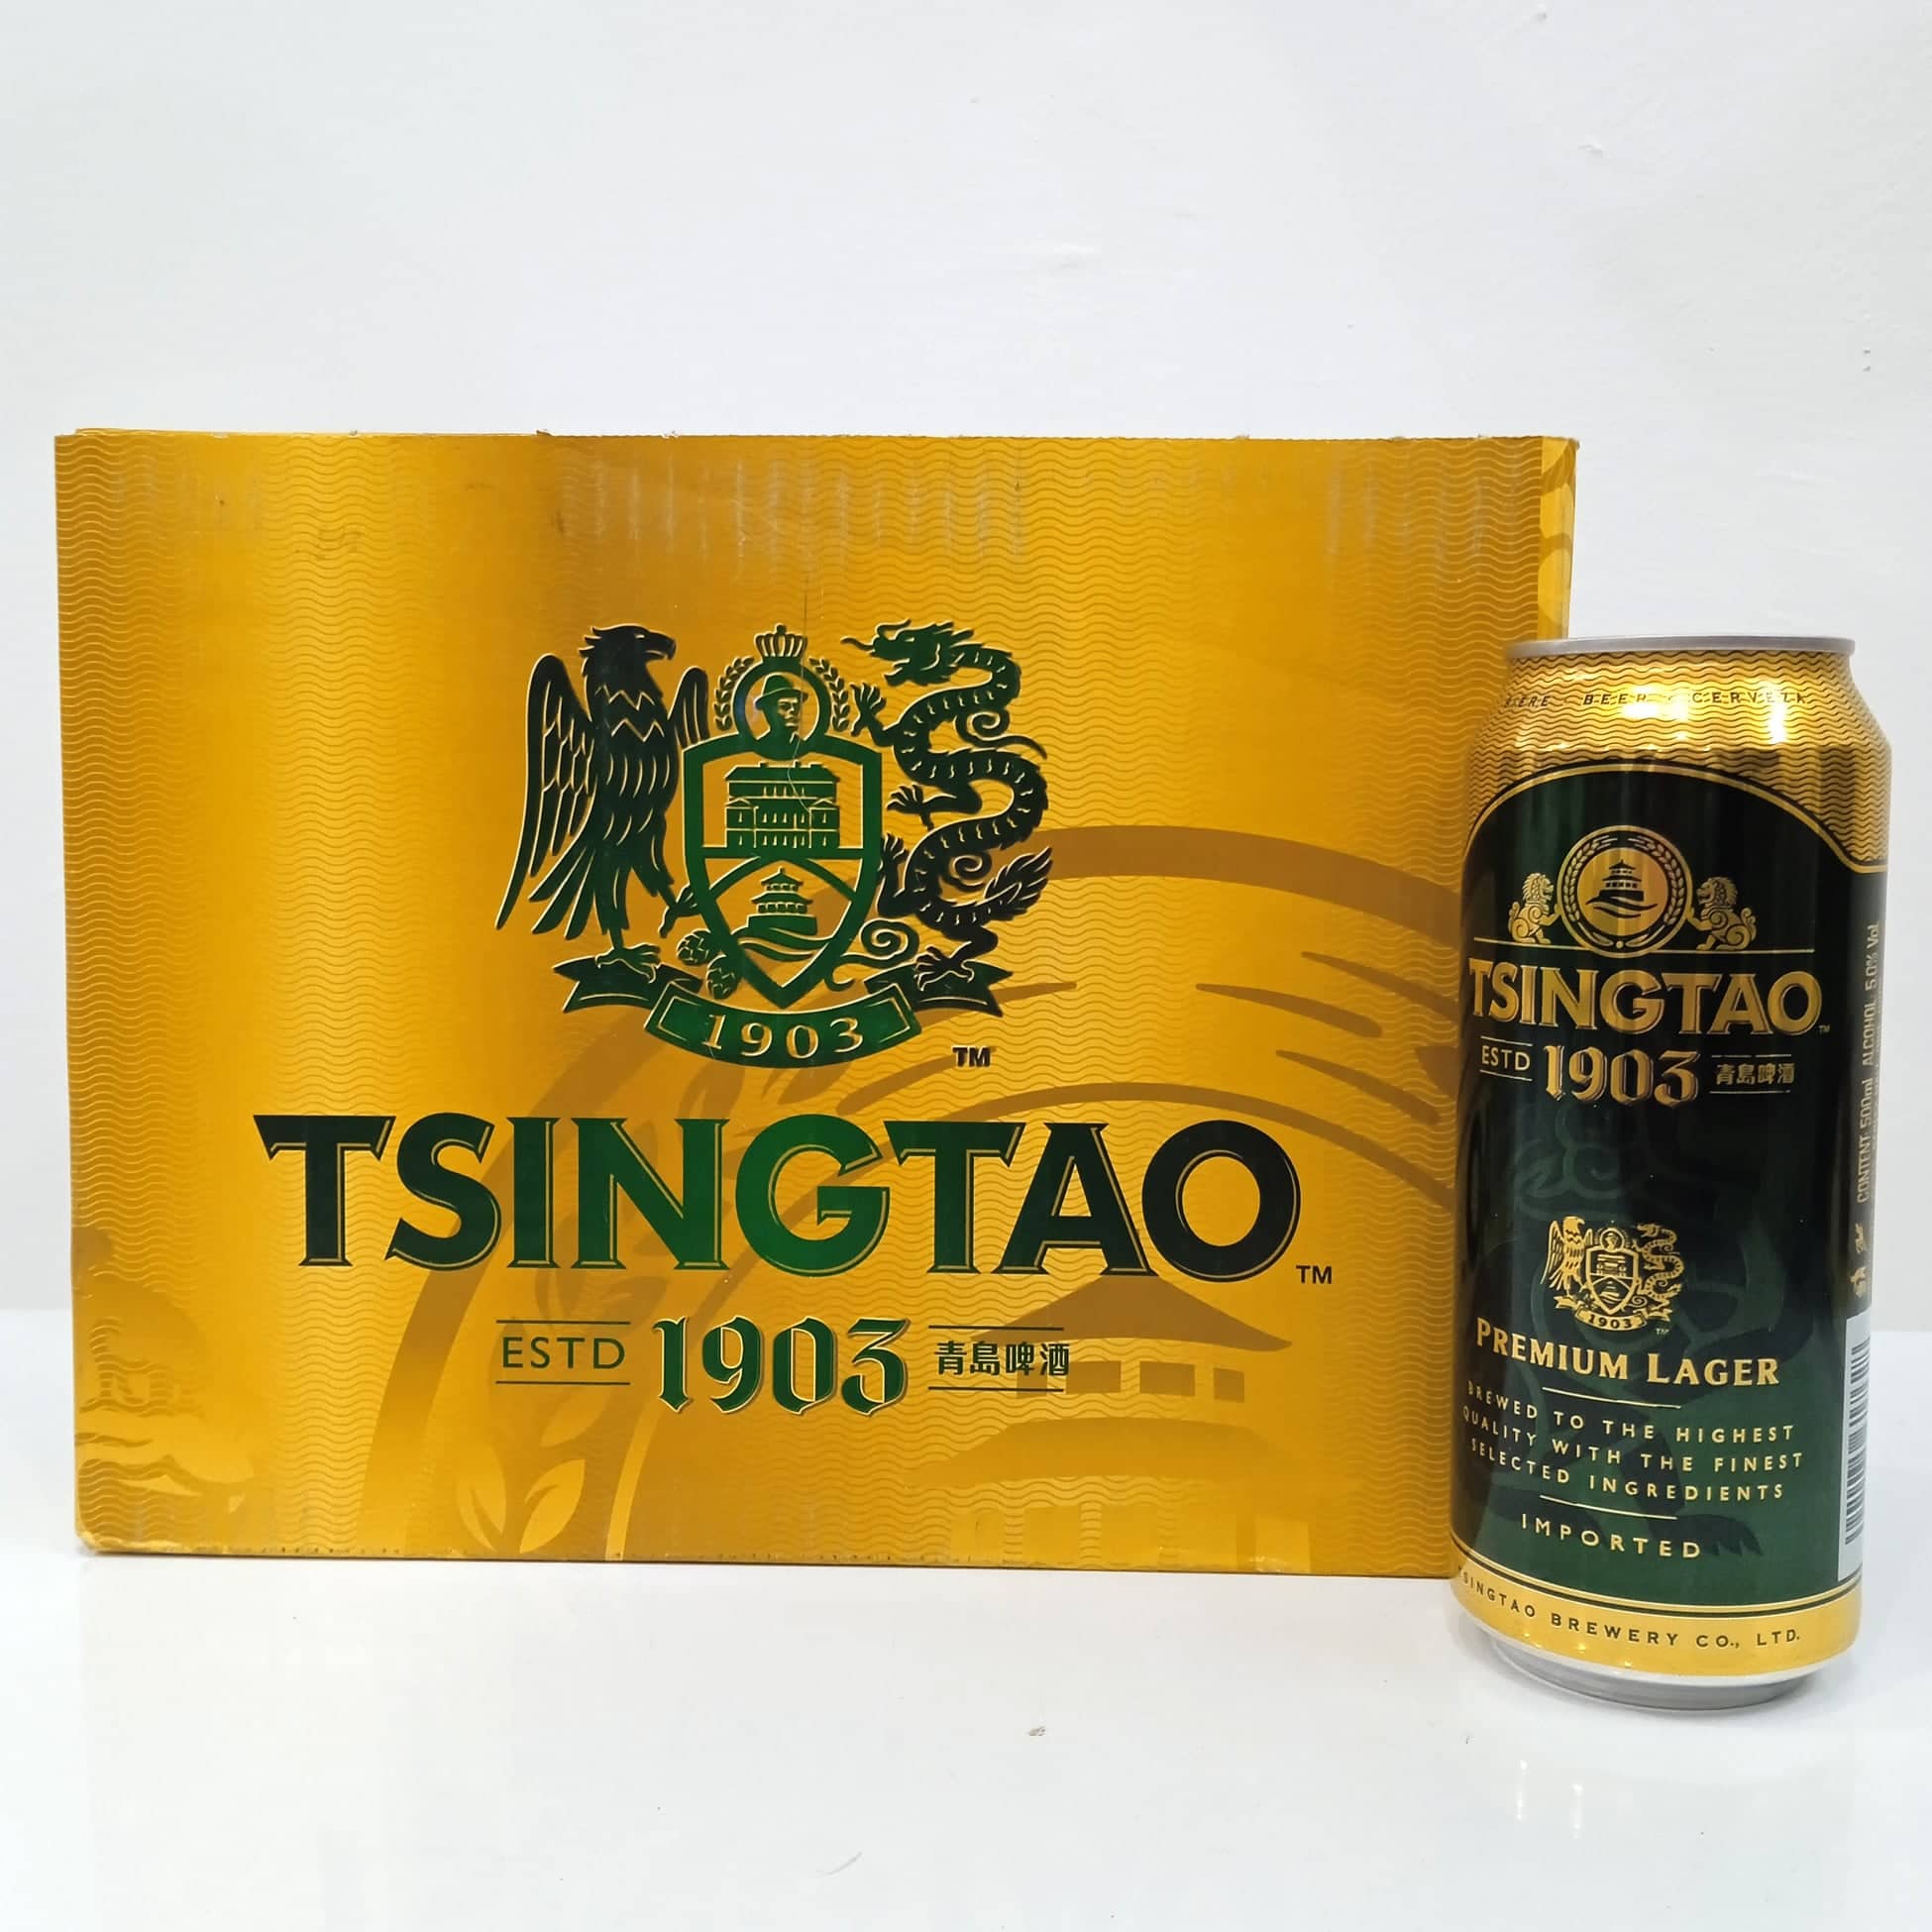 Tsingtao 1903 500mL x 12 cans 青岛啤酒